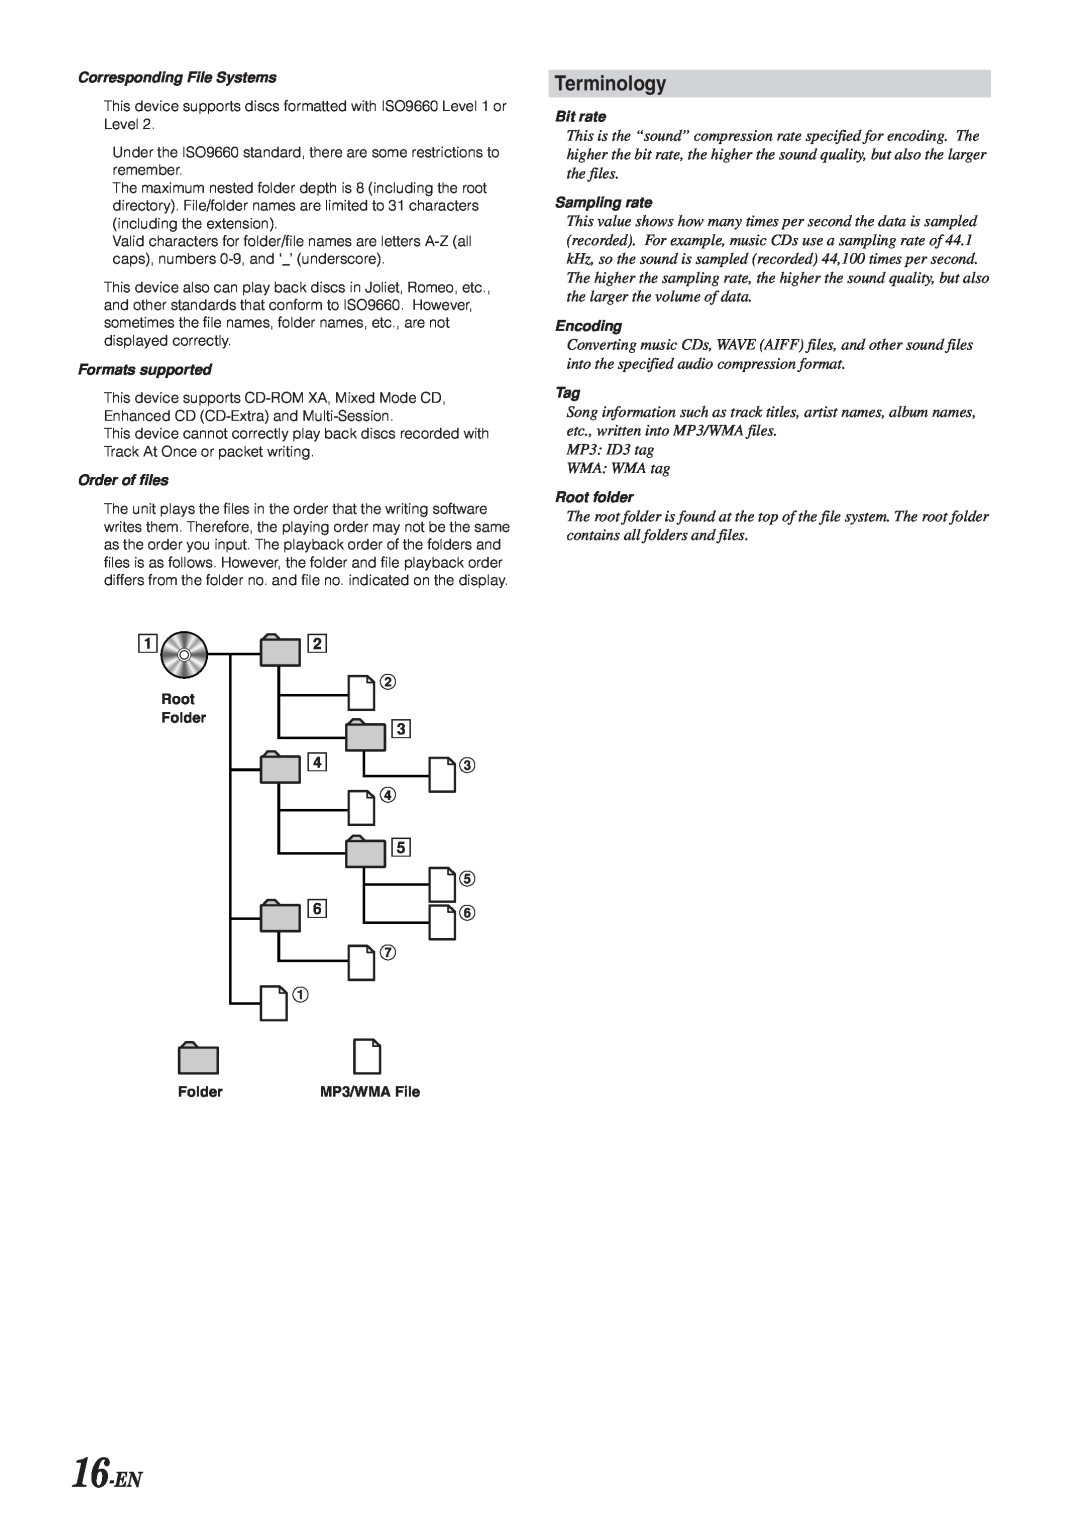 Alpine IVA-D300 owner manual Terminology, 16-EN 